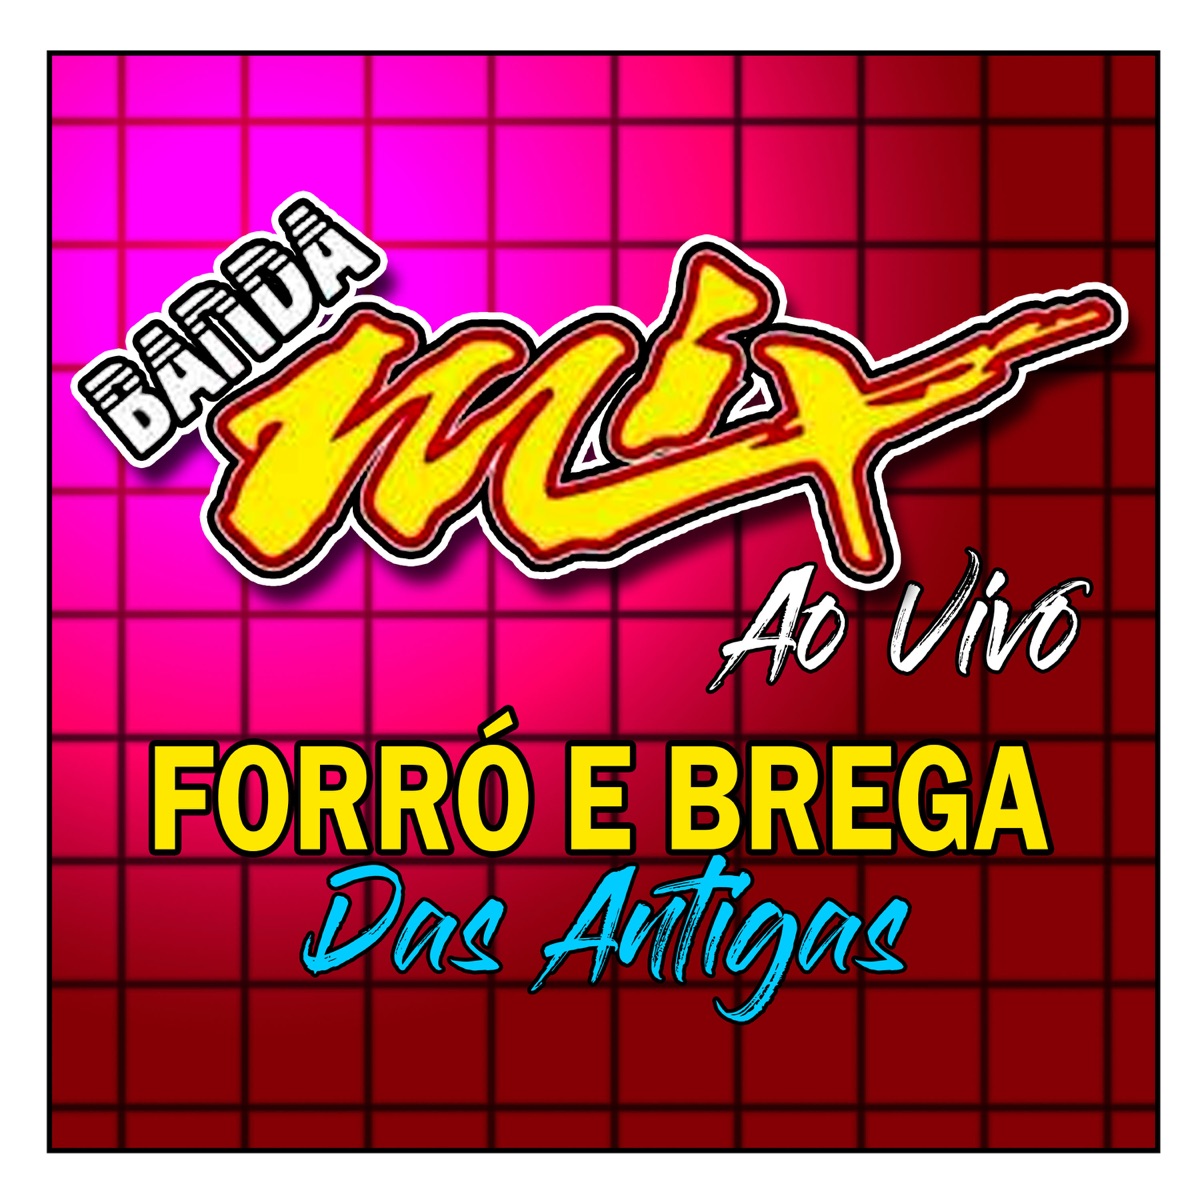 FORRÓ - POP ROCK - FLASH BACK - REGGAE ANTIGO - 2001 NATAL RN》- BANDA  MIX的专辑- Apple Music